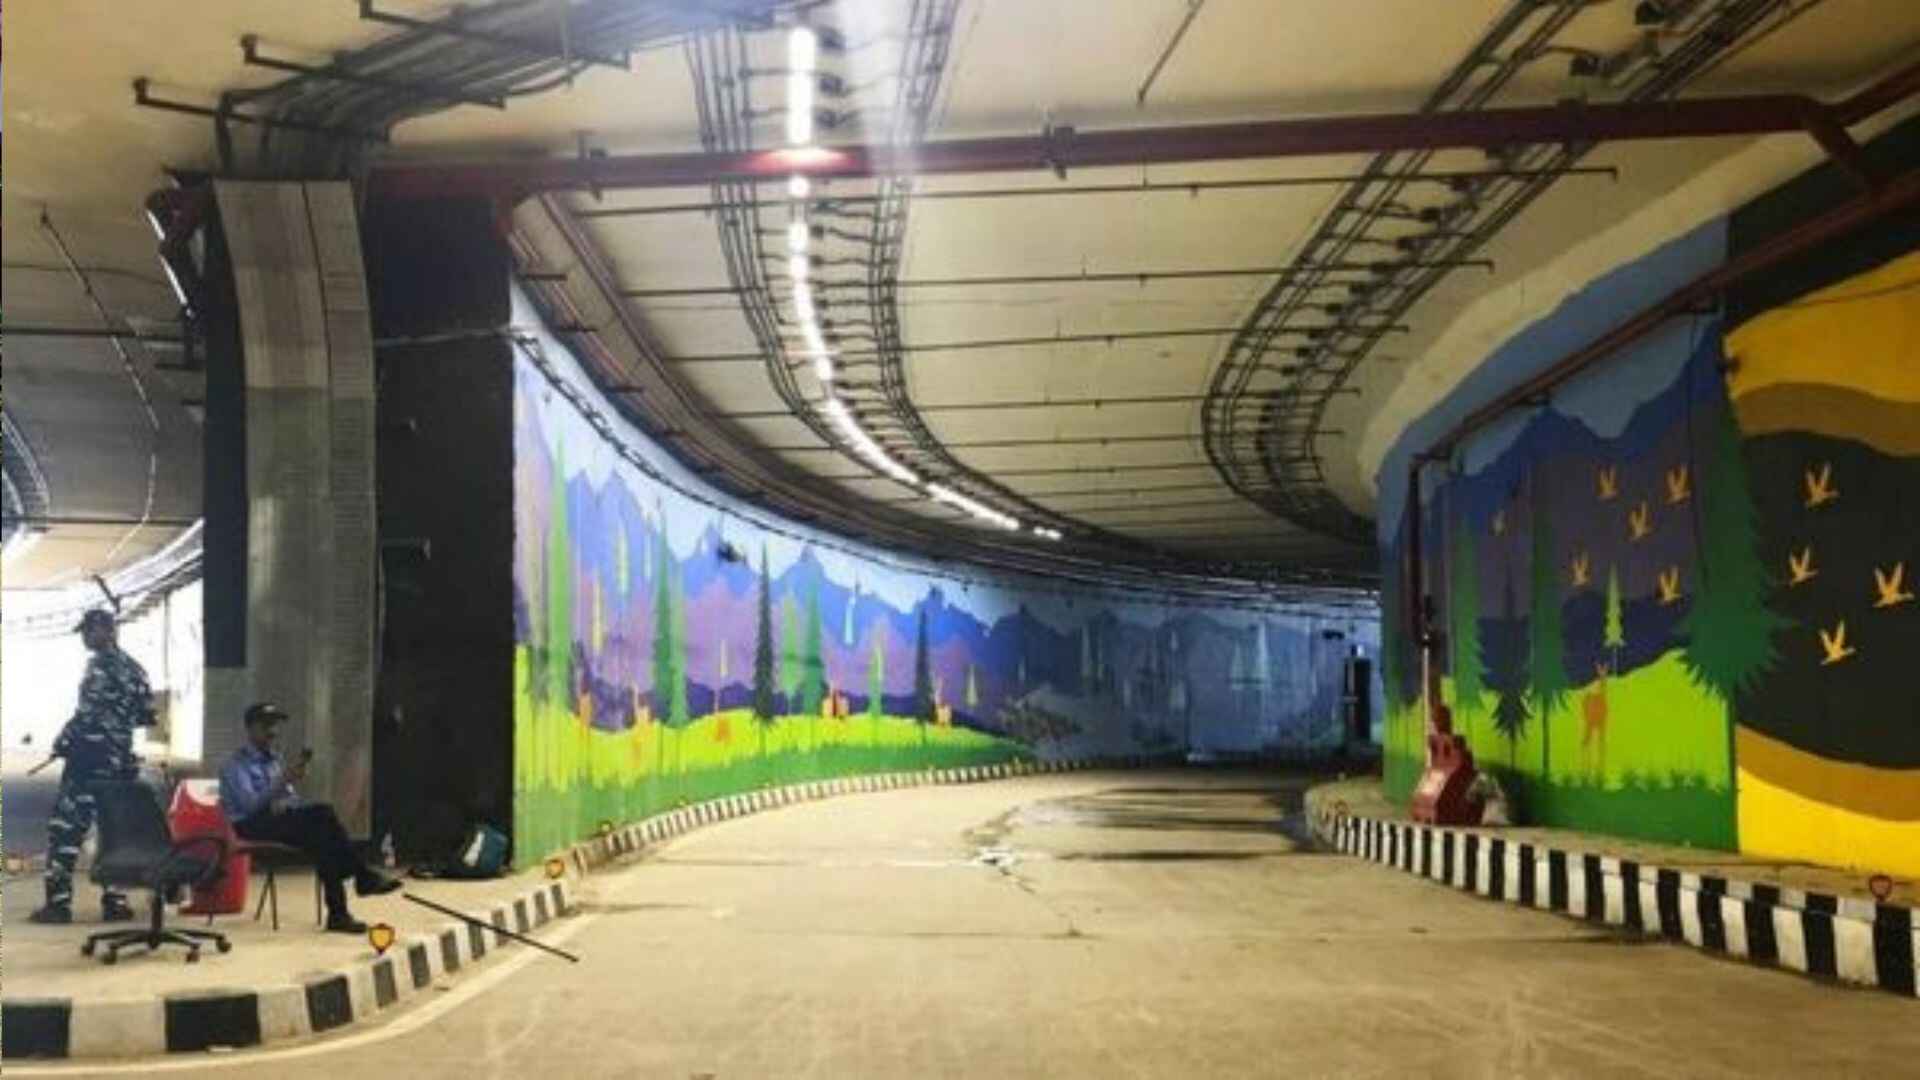 Delhi: Despite renovation, the Pragati Maidan tunnel remains a potential life threat